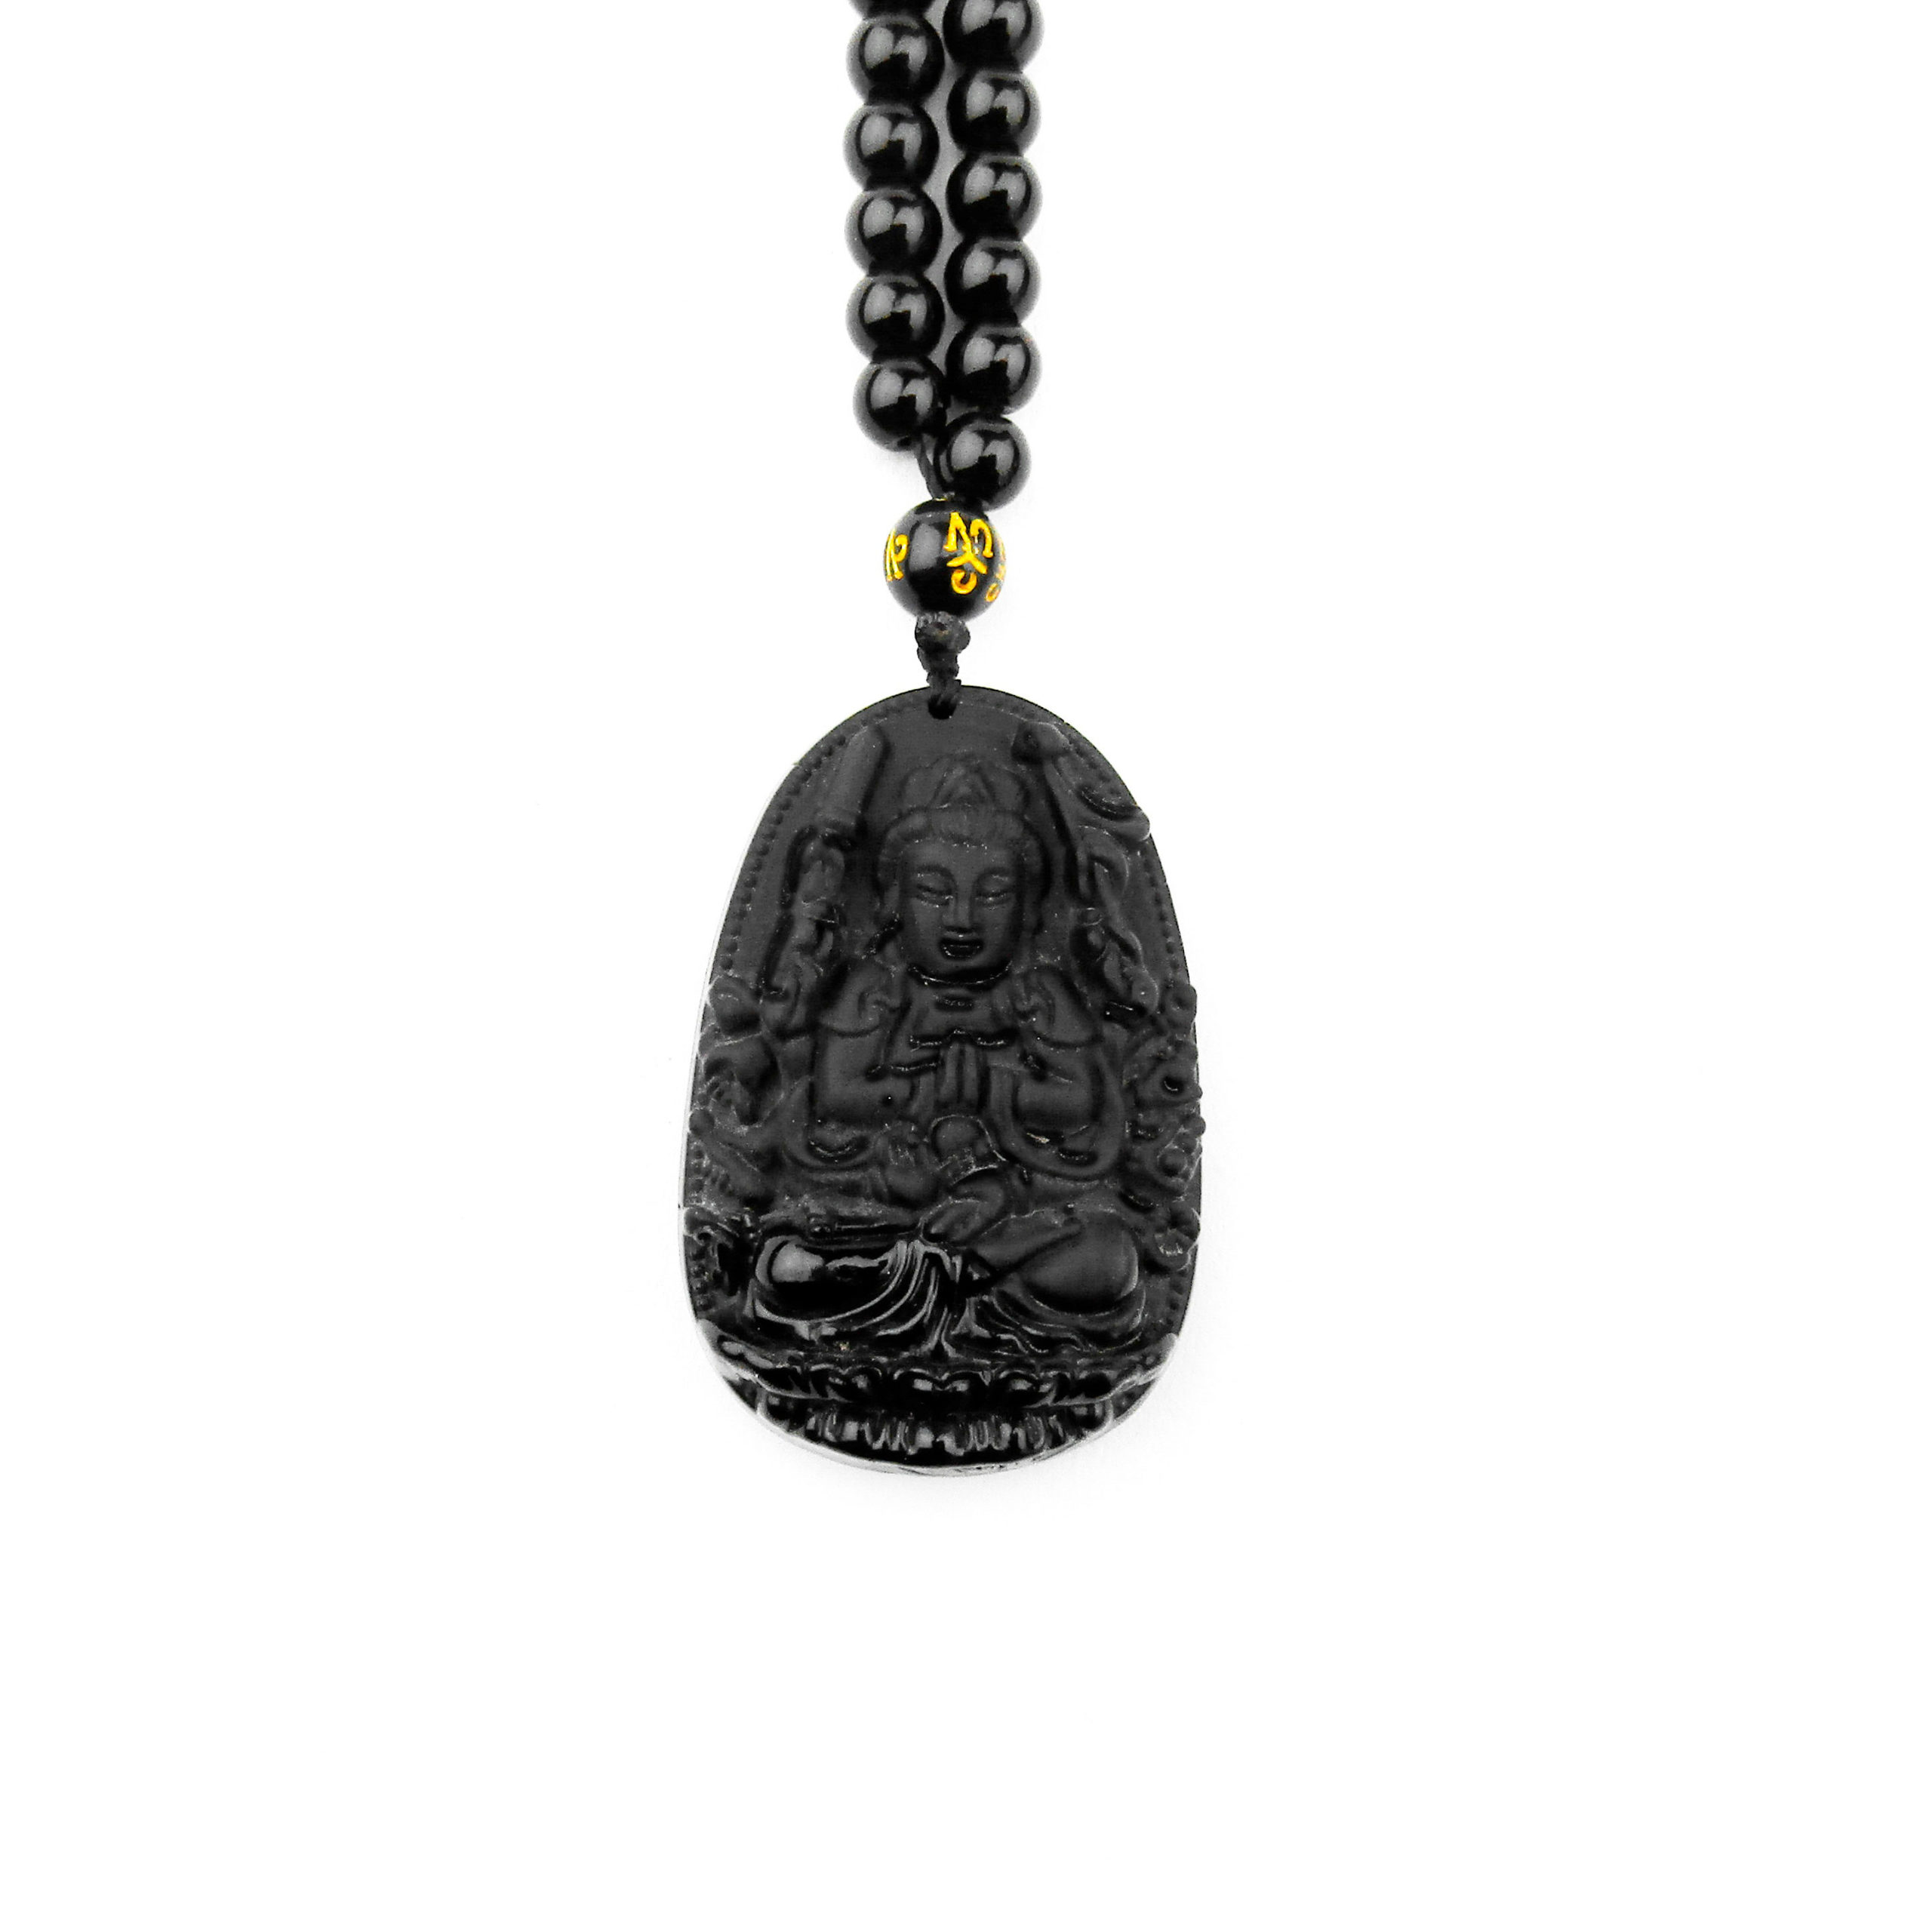 Collar de piedra obsidiana para hombre Buda